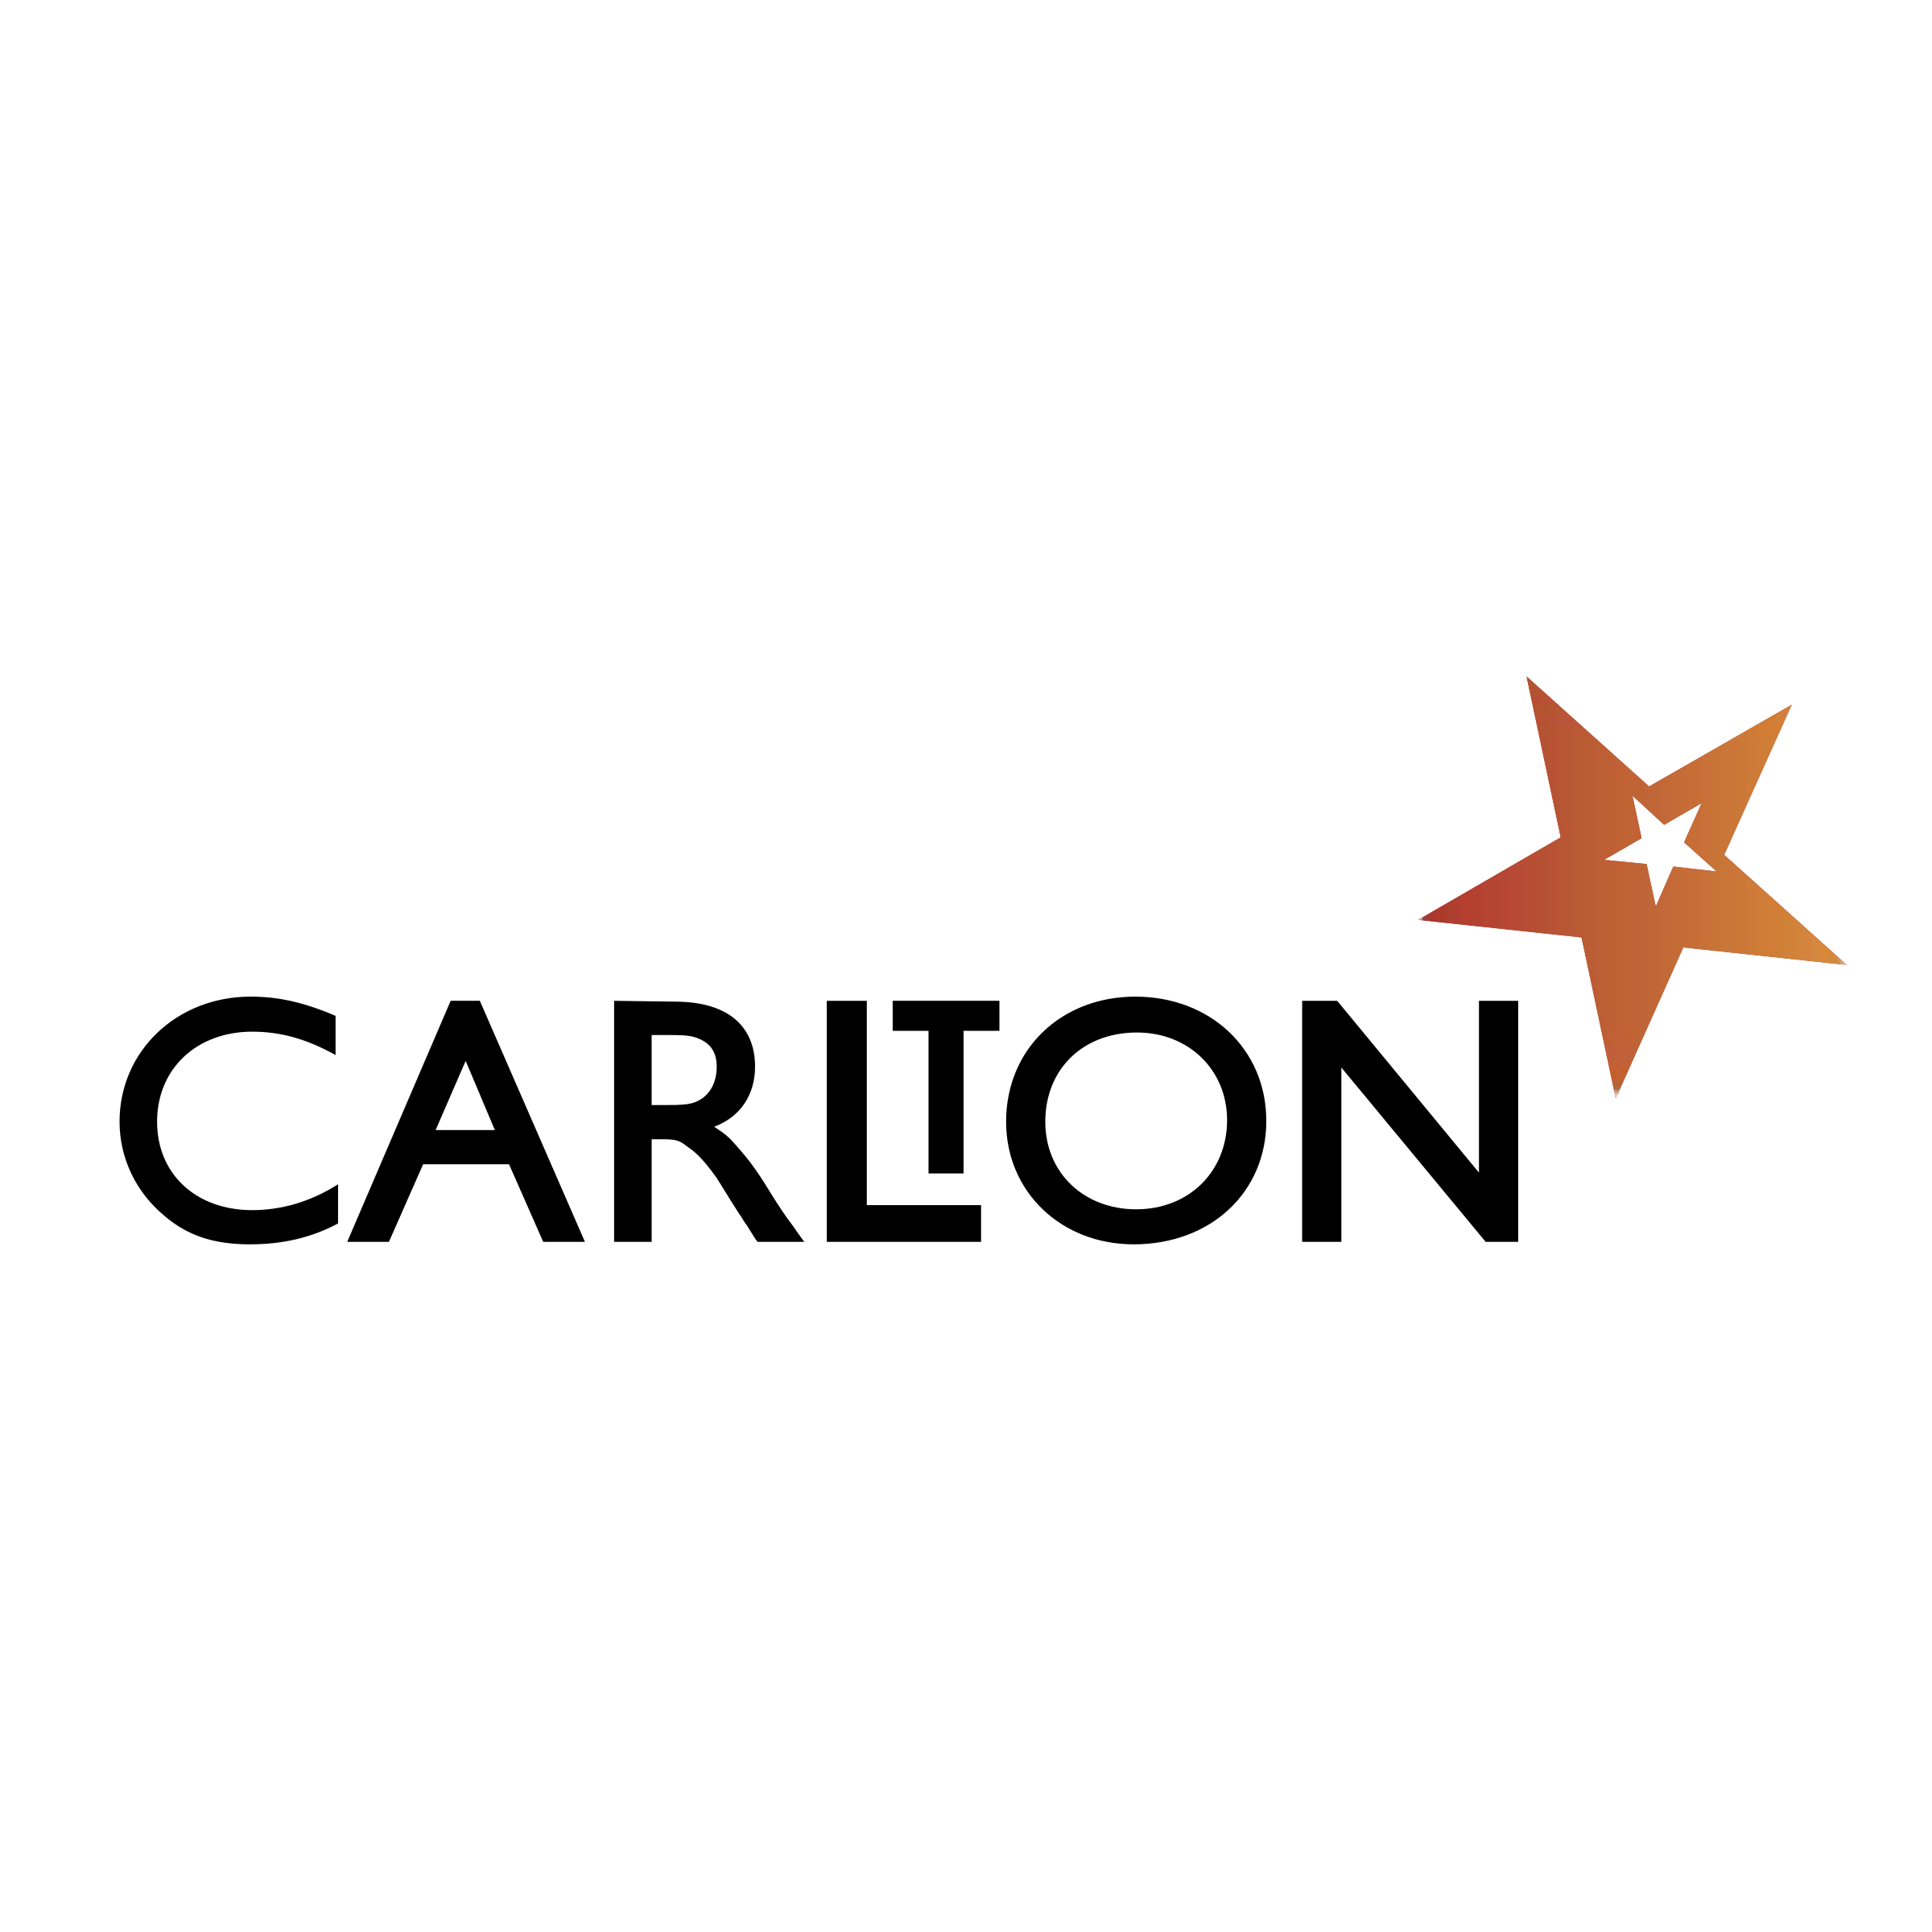 Carlton Logo - Carlton Logo PNG Transparent & SVG Vector